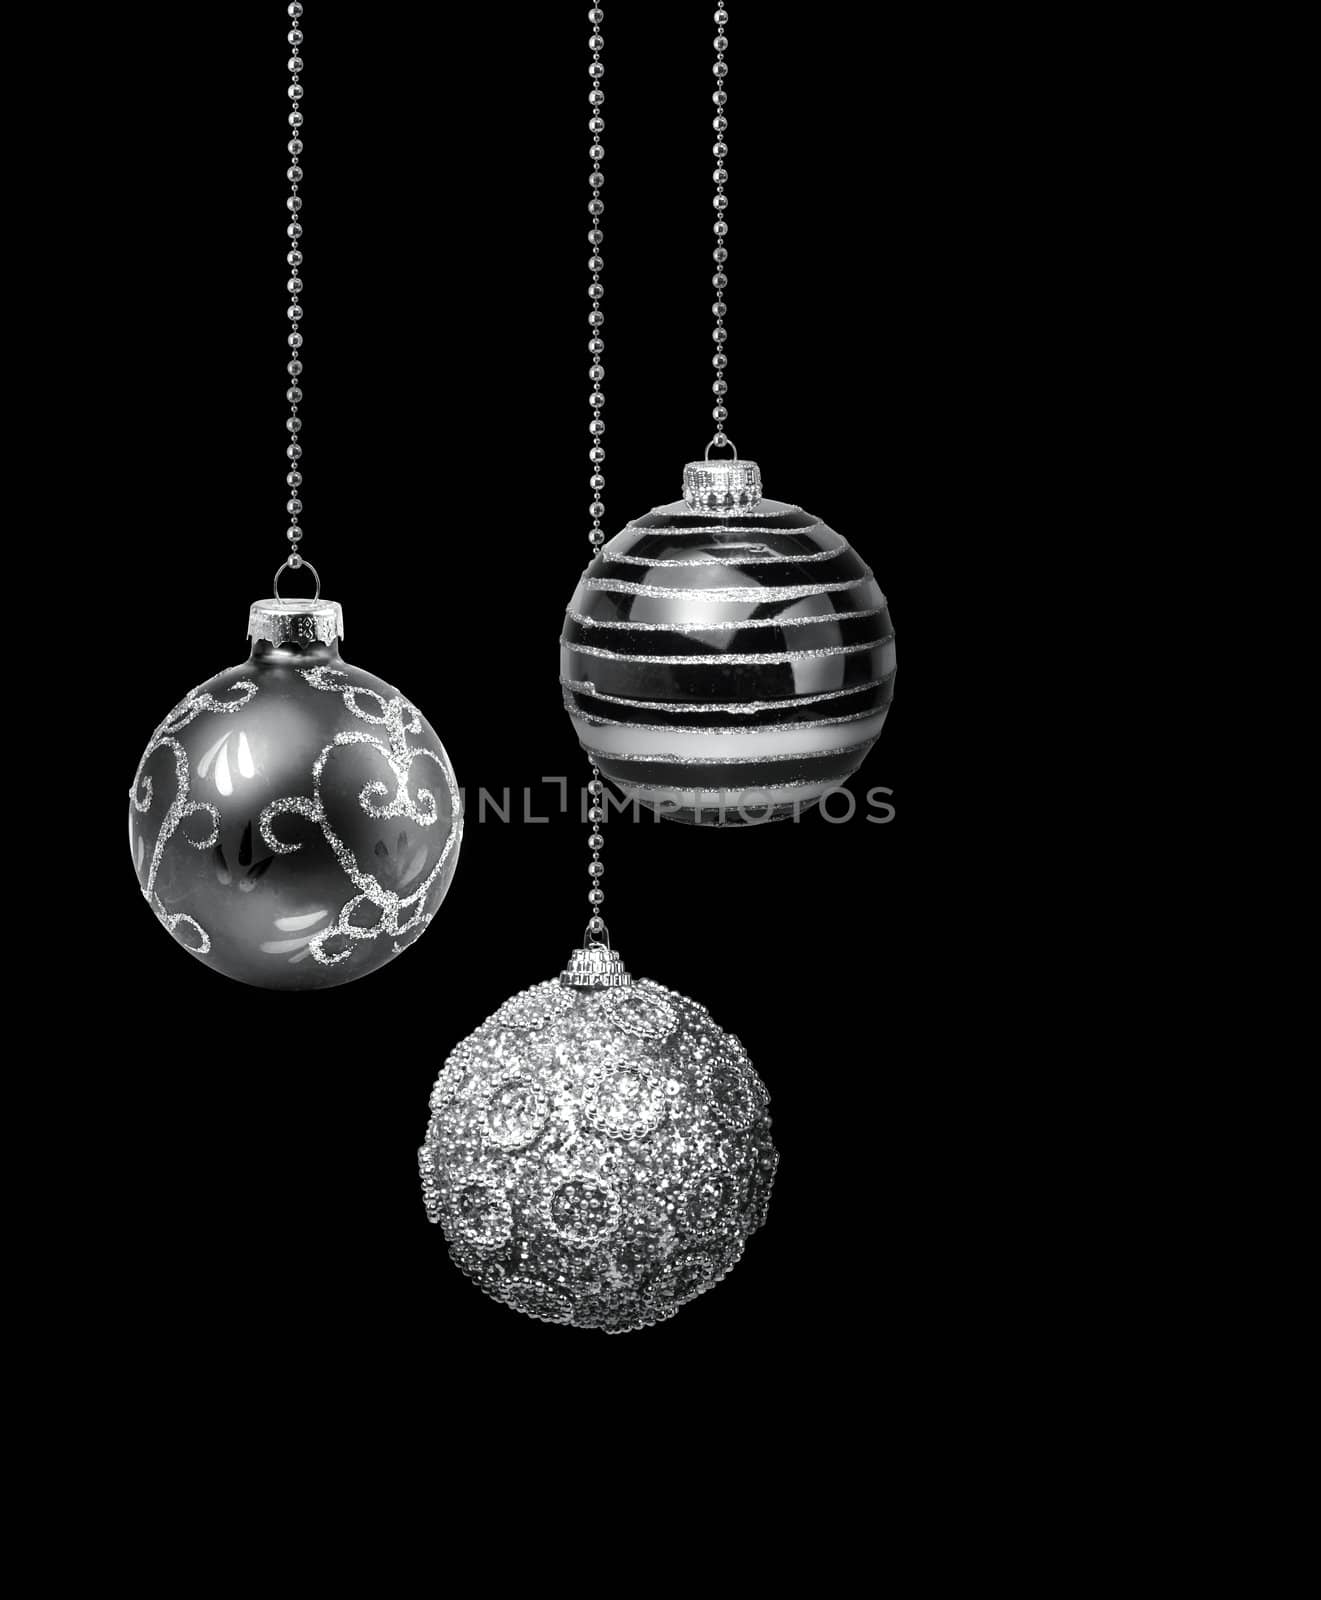 Silver Christmas balls by anterovium